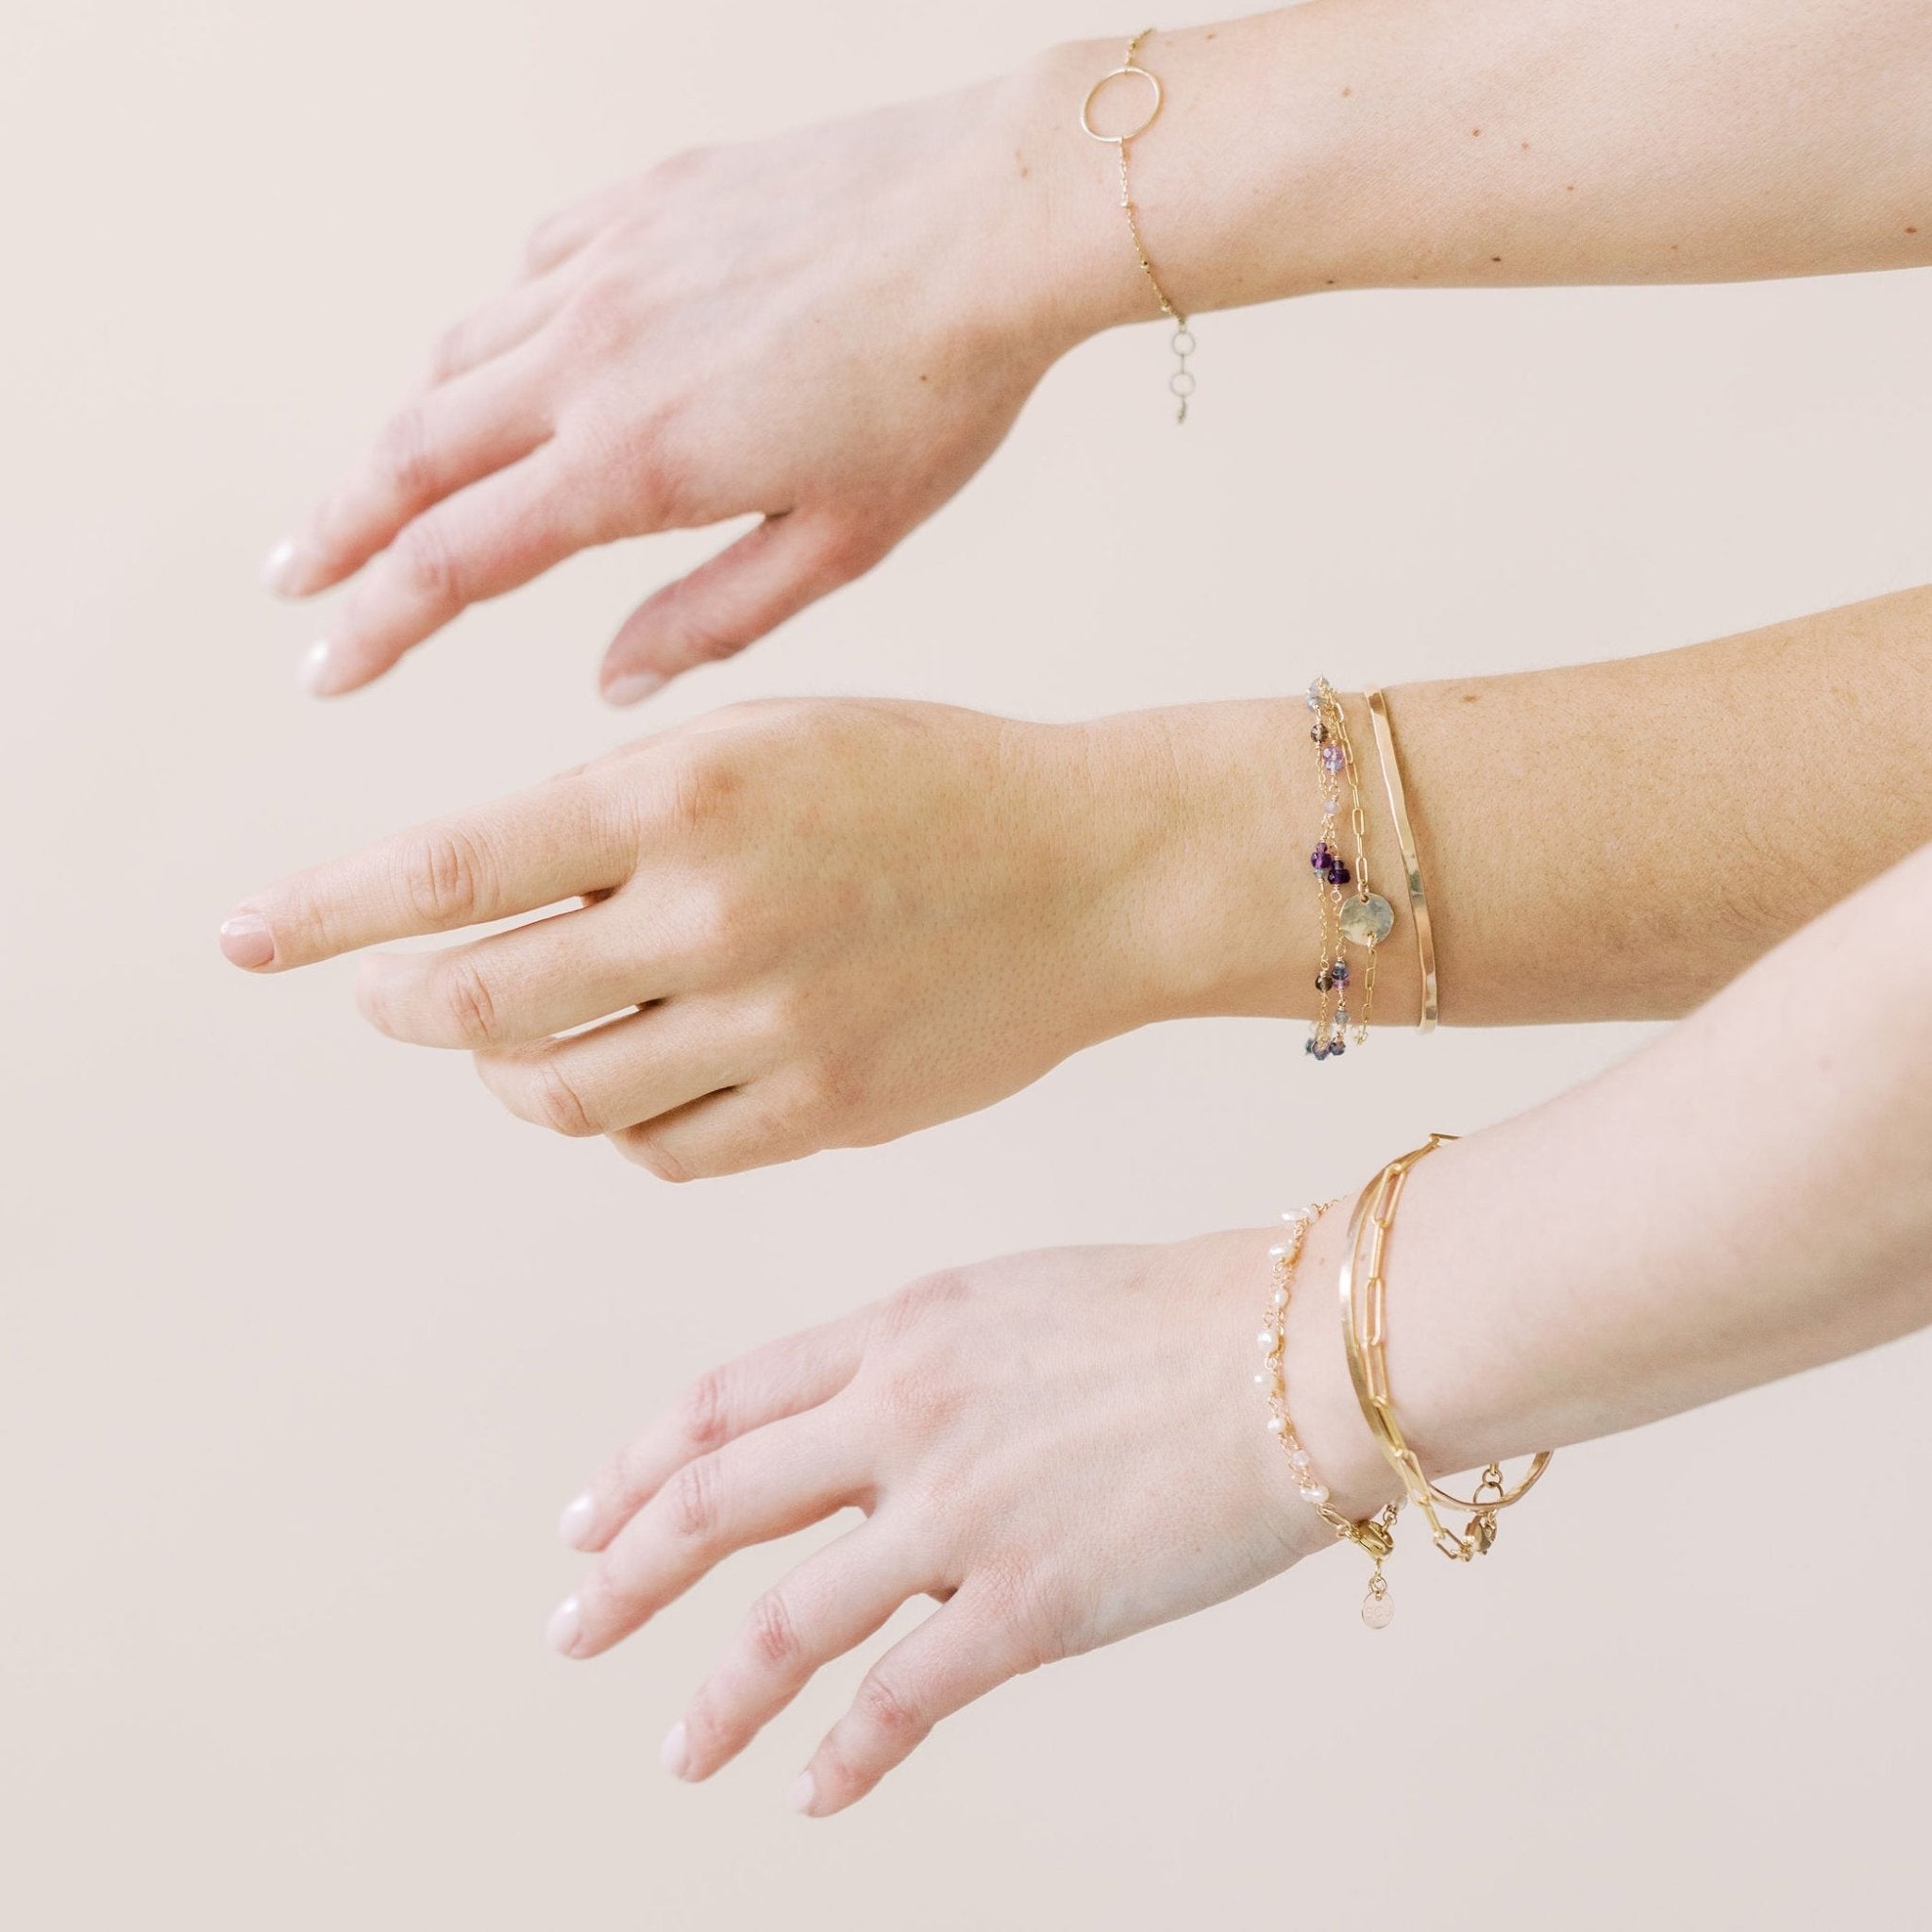 Bracelets - Sarah Cornwell Jewelry